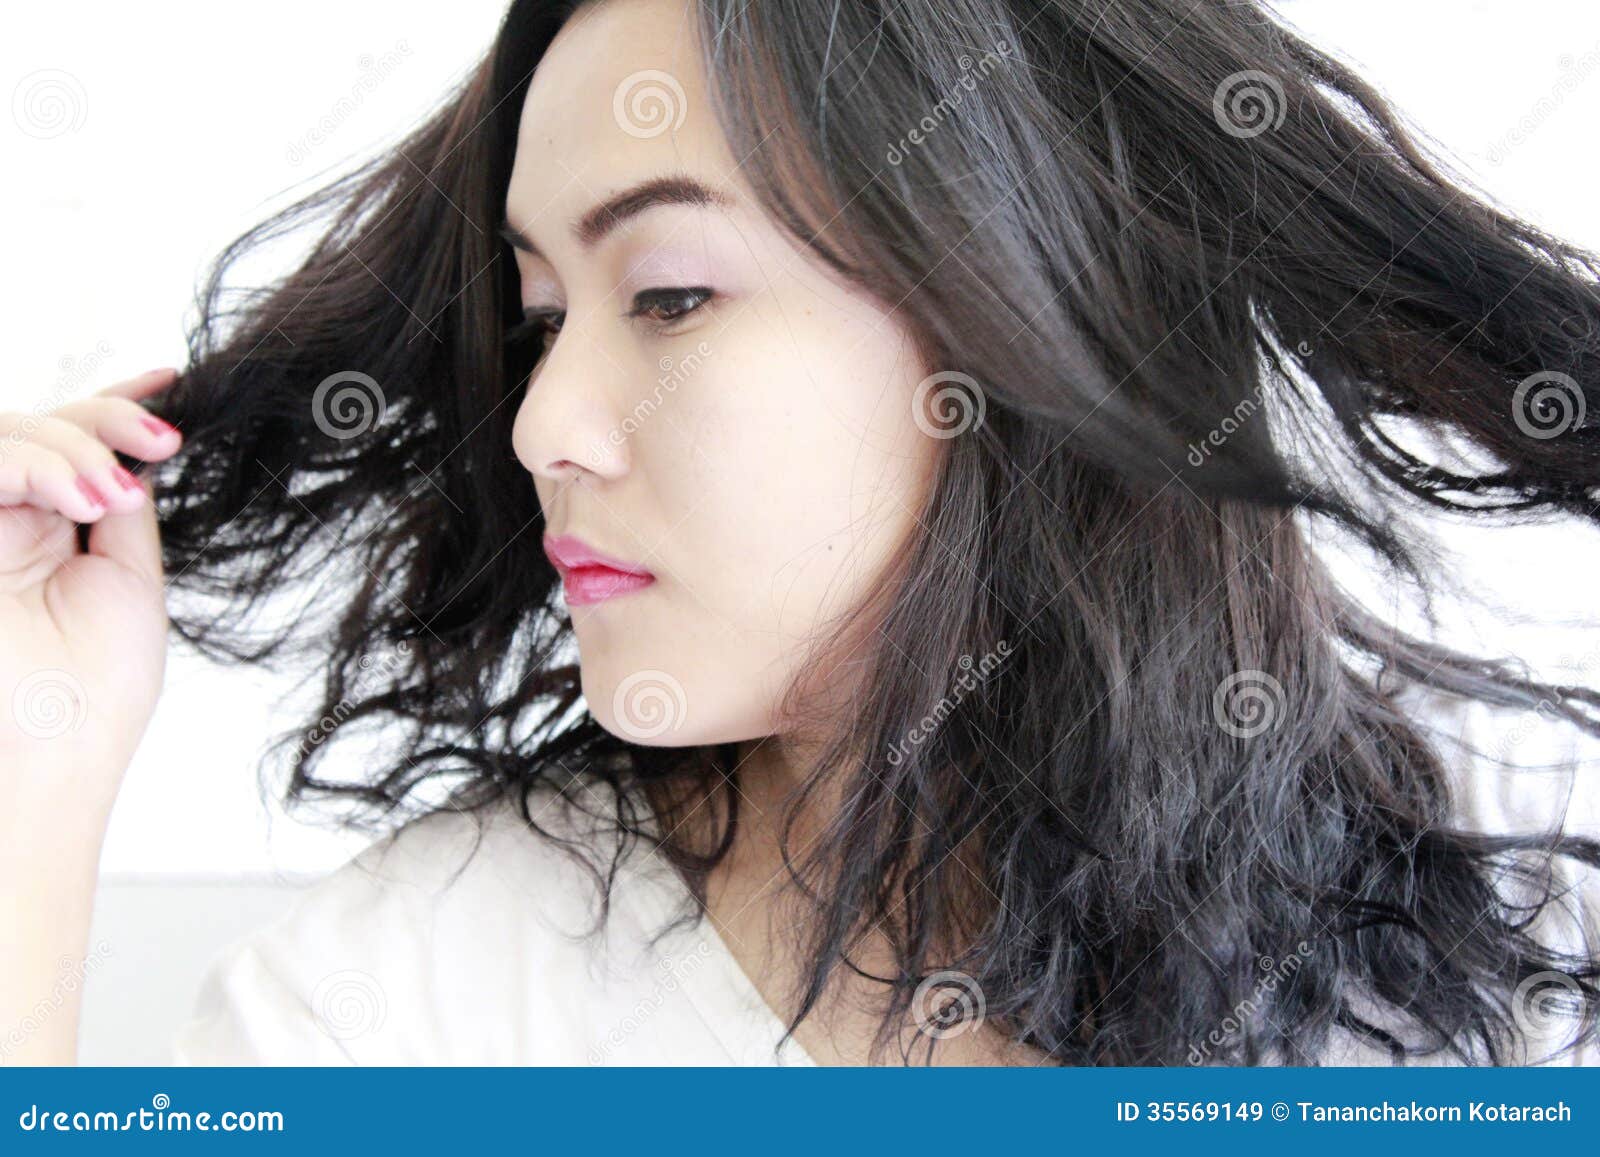 Woman stock image. Image of flick, cosmetic, woman, girl - 35569149